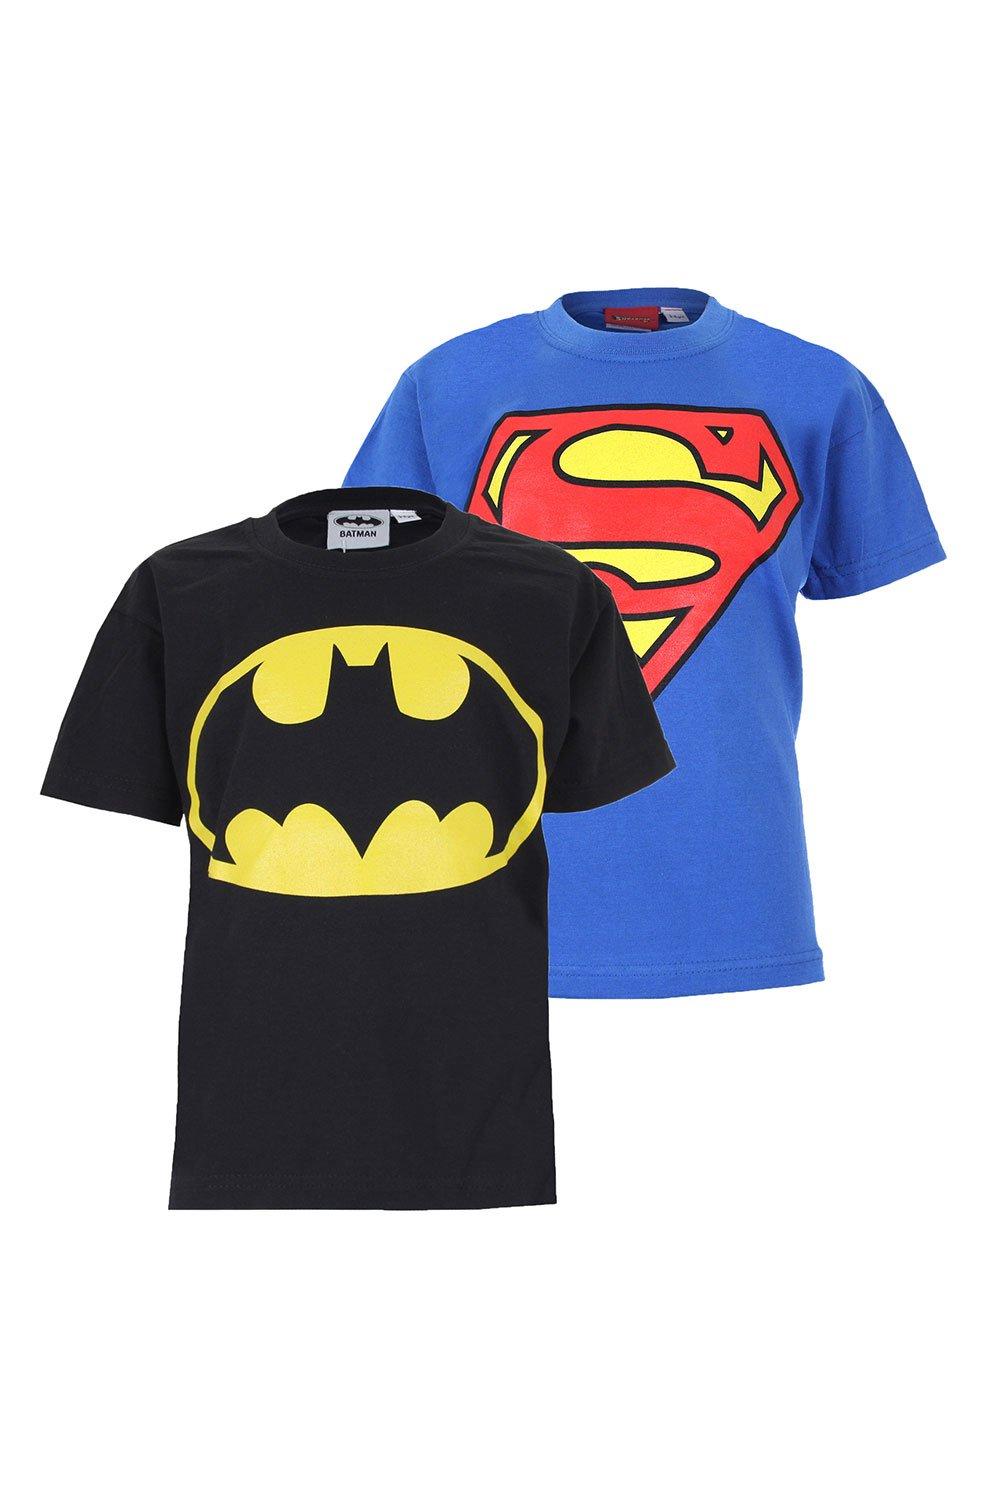 Superman & Batman Kids 2 Pack Cotton T-Shirt